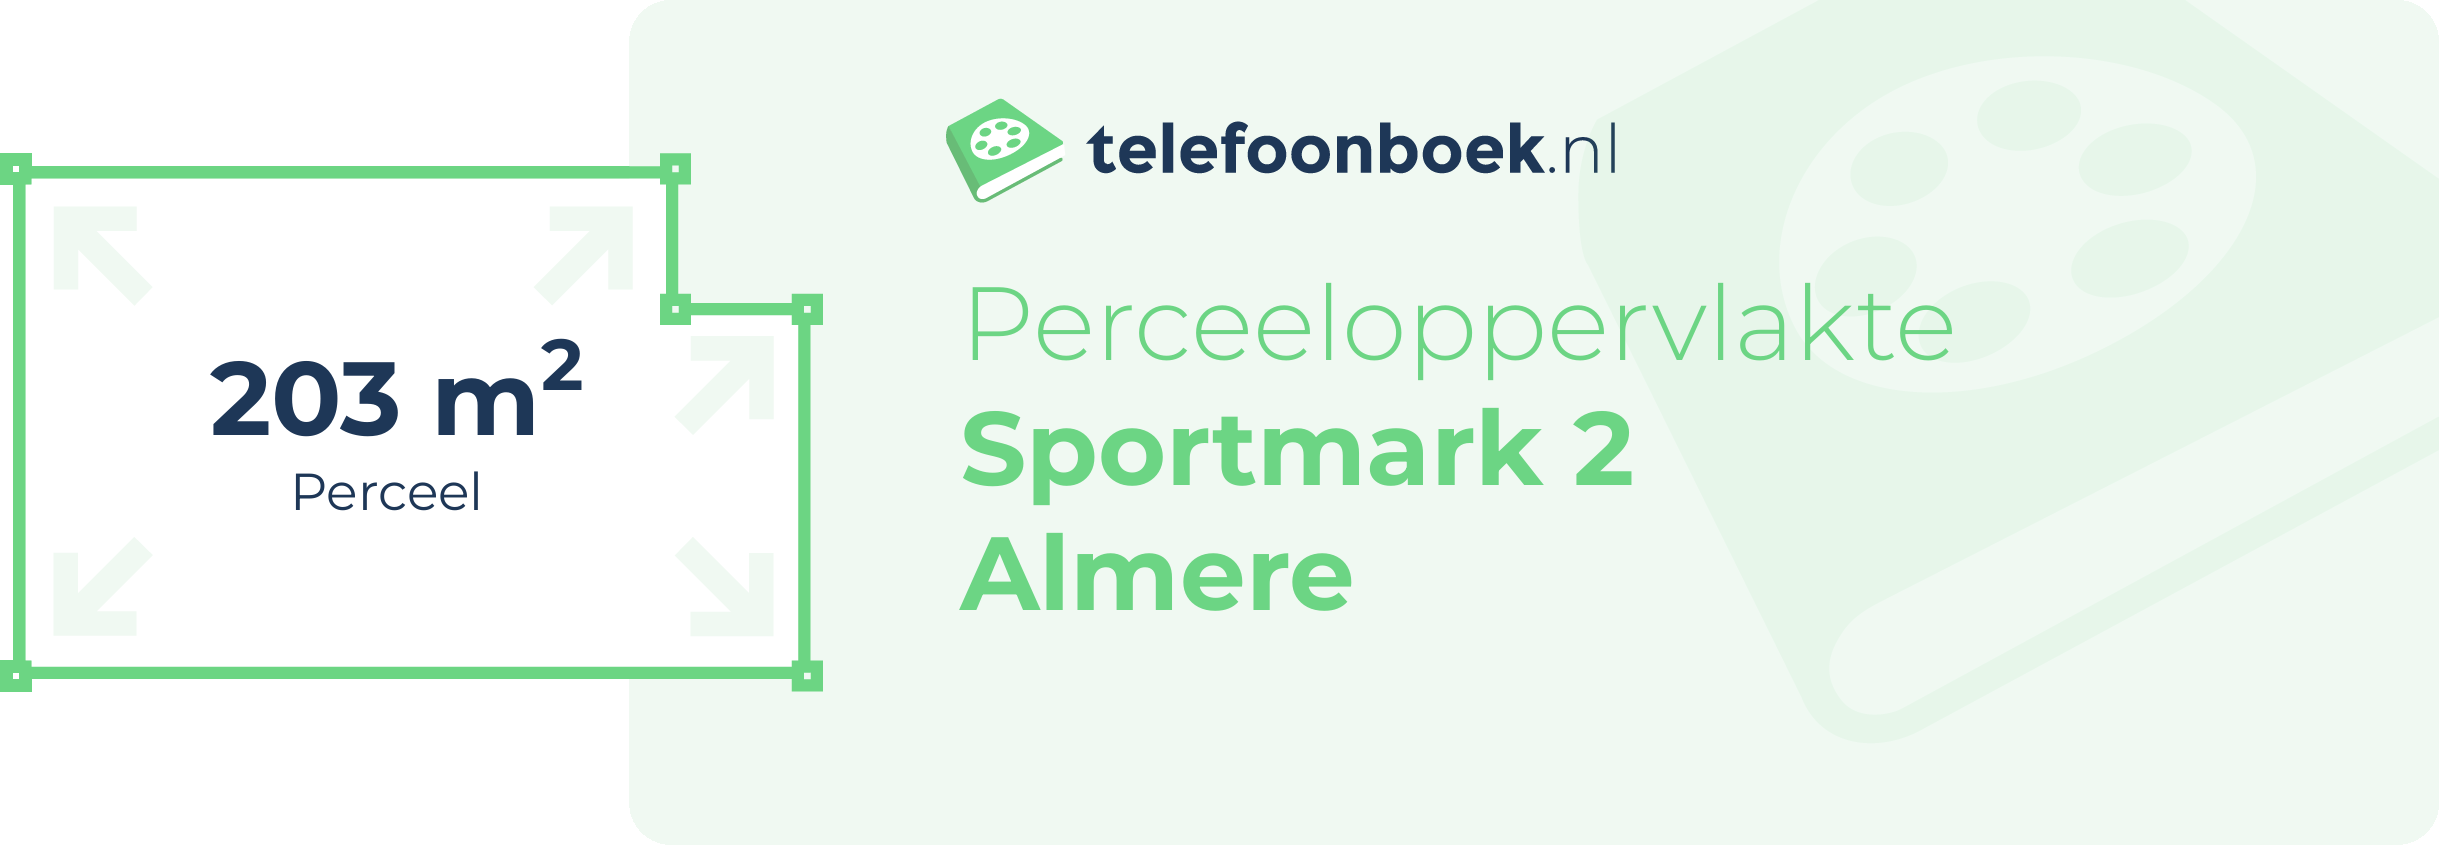 Perceeloppervlakte Sportmark 2 Almere